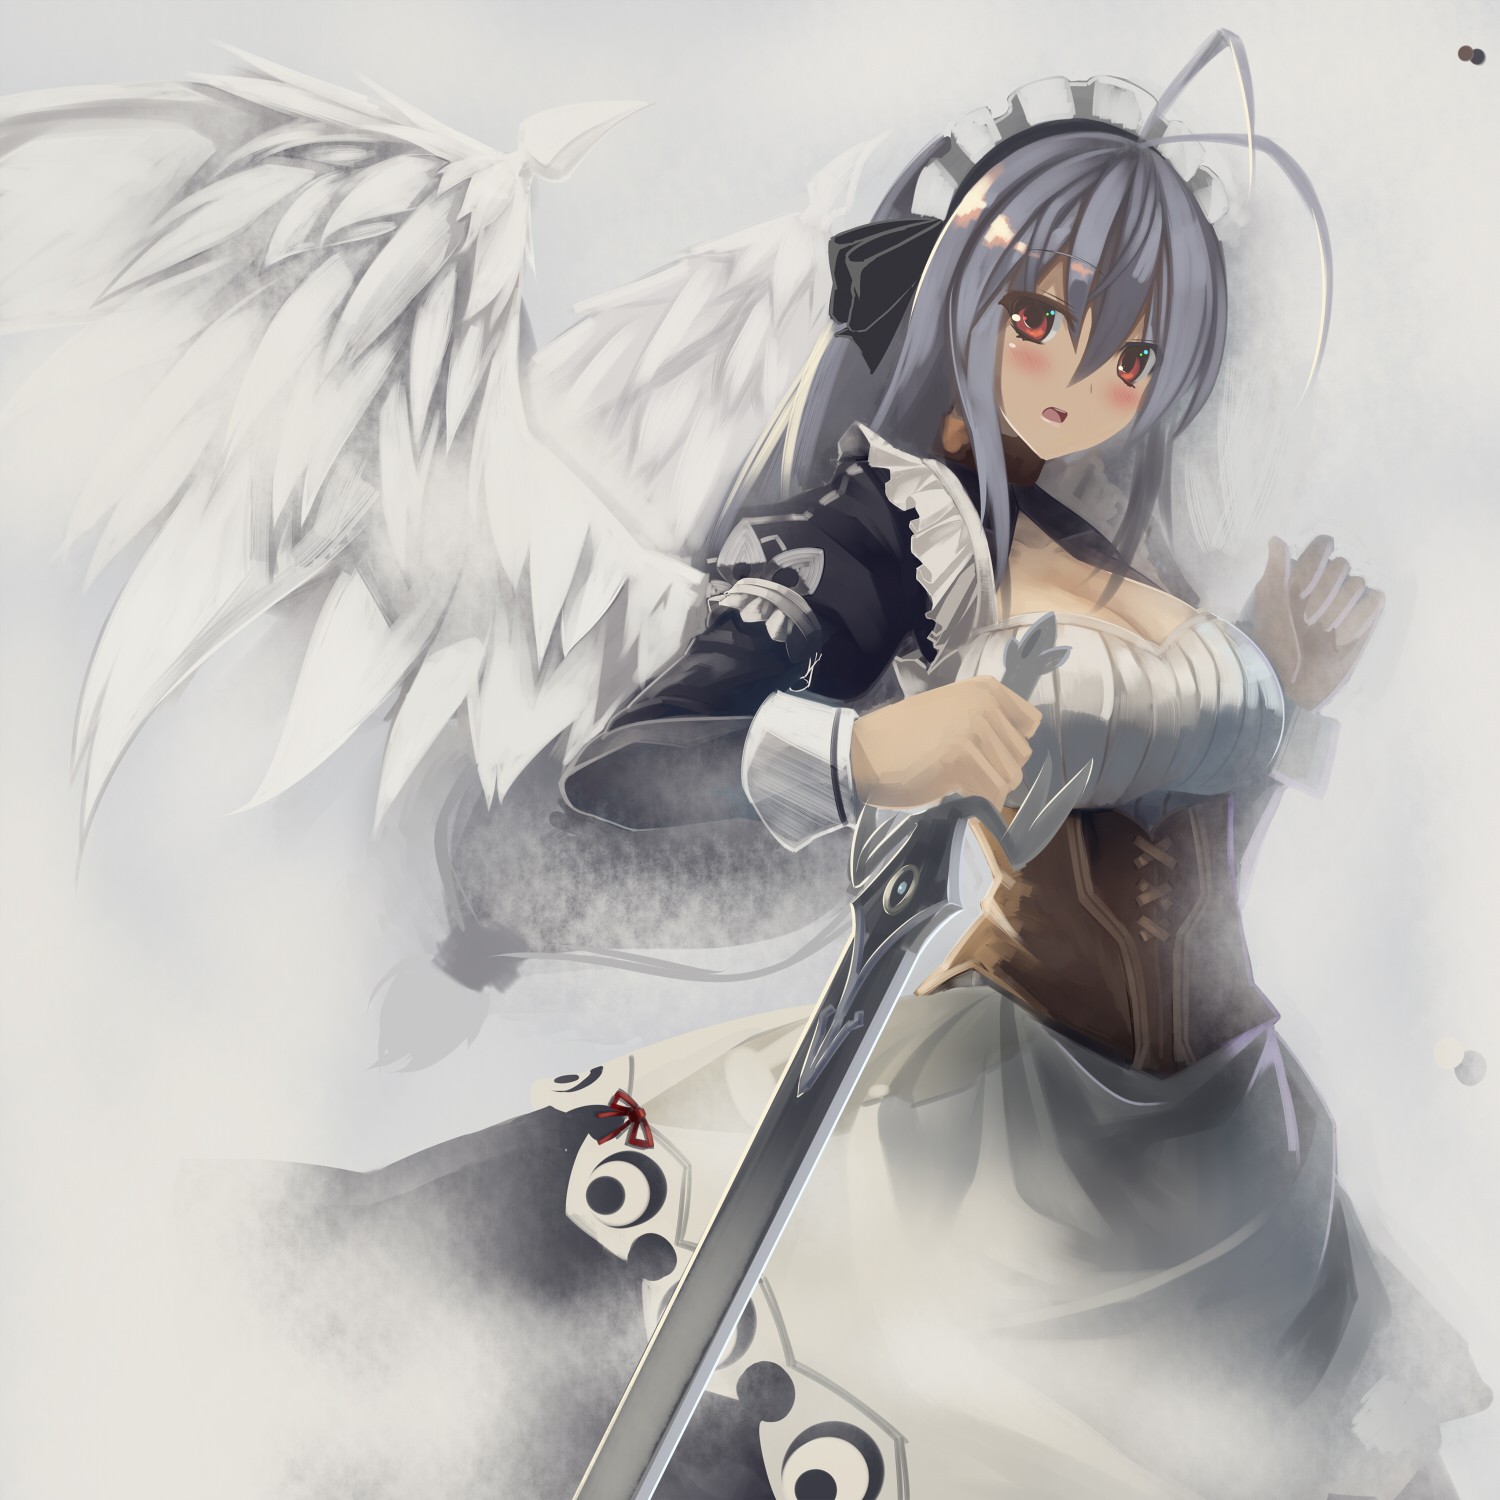 Anime 1500x1500 anime anime girls red eyes long hair wings sword weapon Pixiv fantasy art fantasy girl women with swords